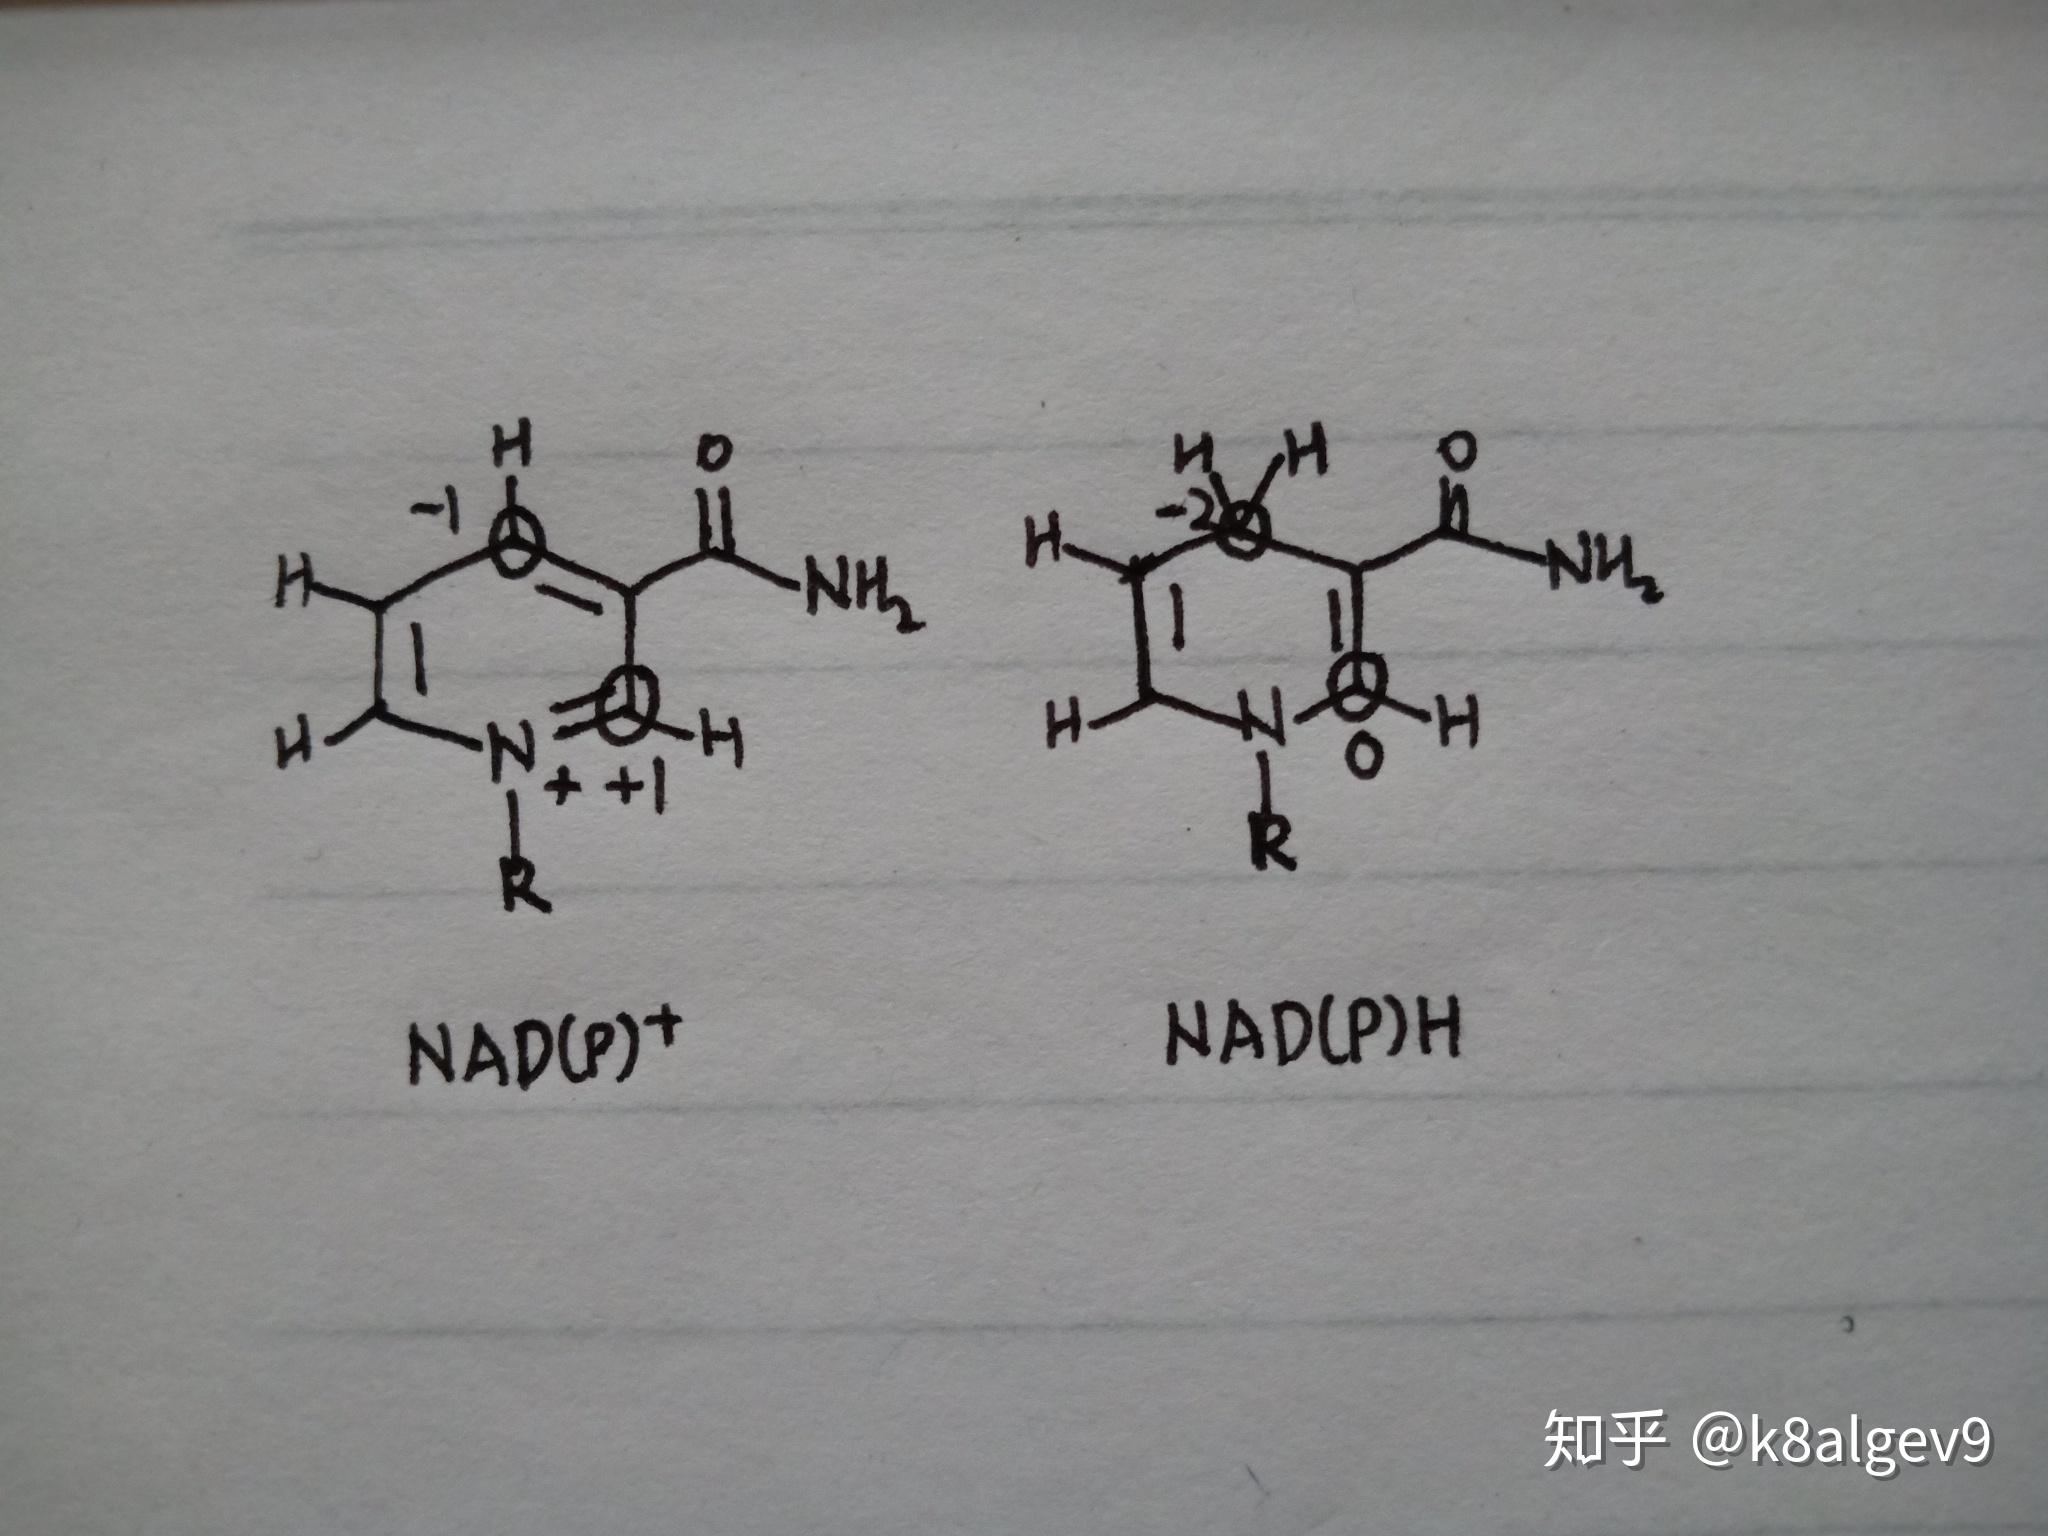 NADH和NADPH中氢元素的化合价是-1价吗?